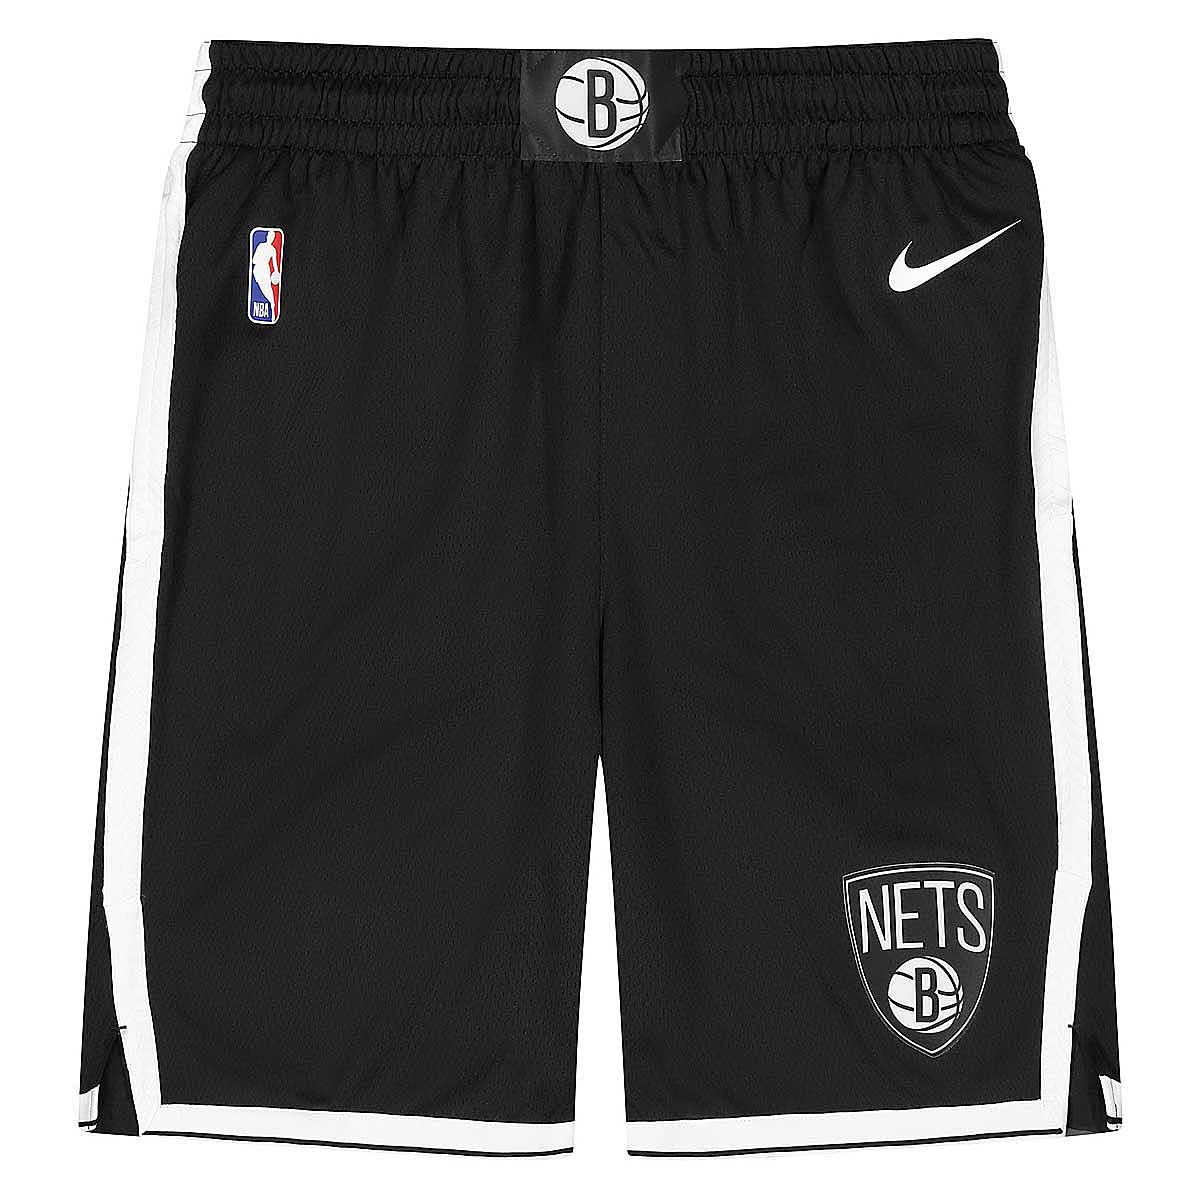 Image of Nike NBA Brooklyn Nets Dri-fit Icon Swingman Shorts, Black/(white)